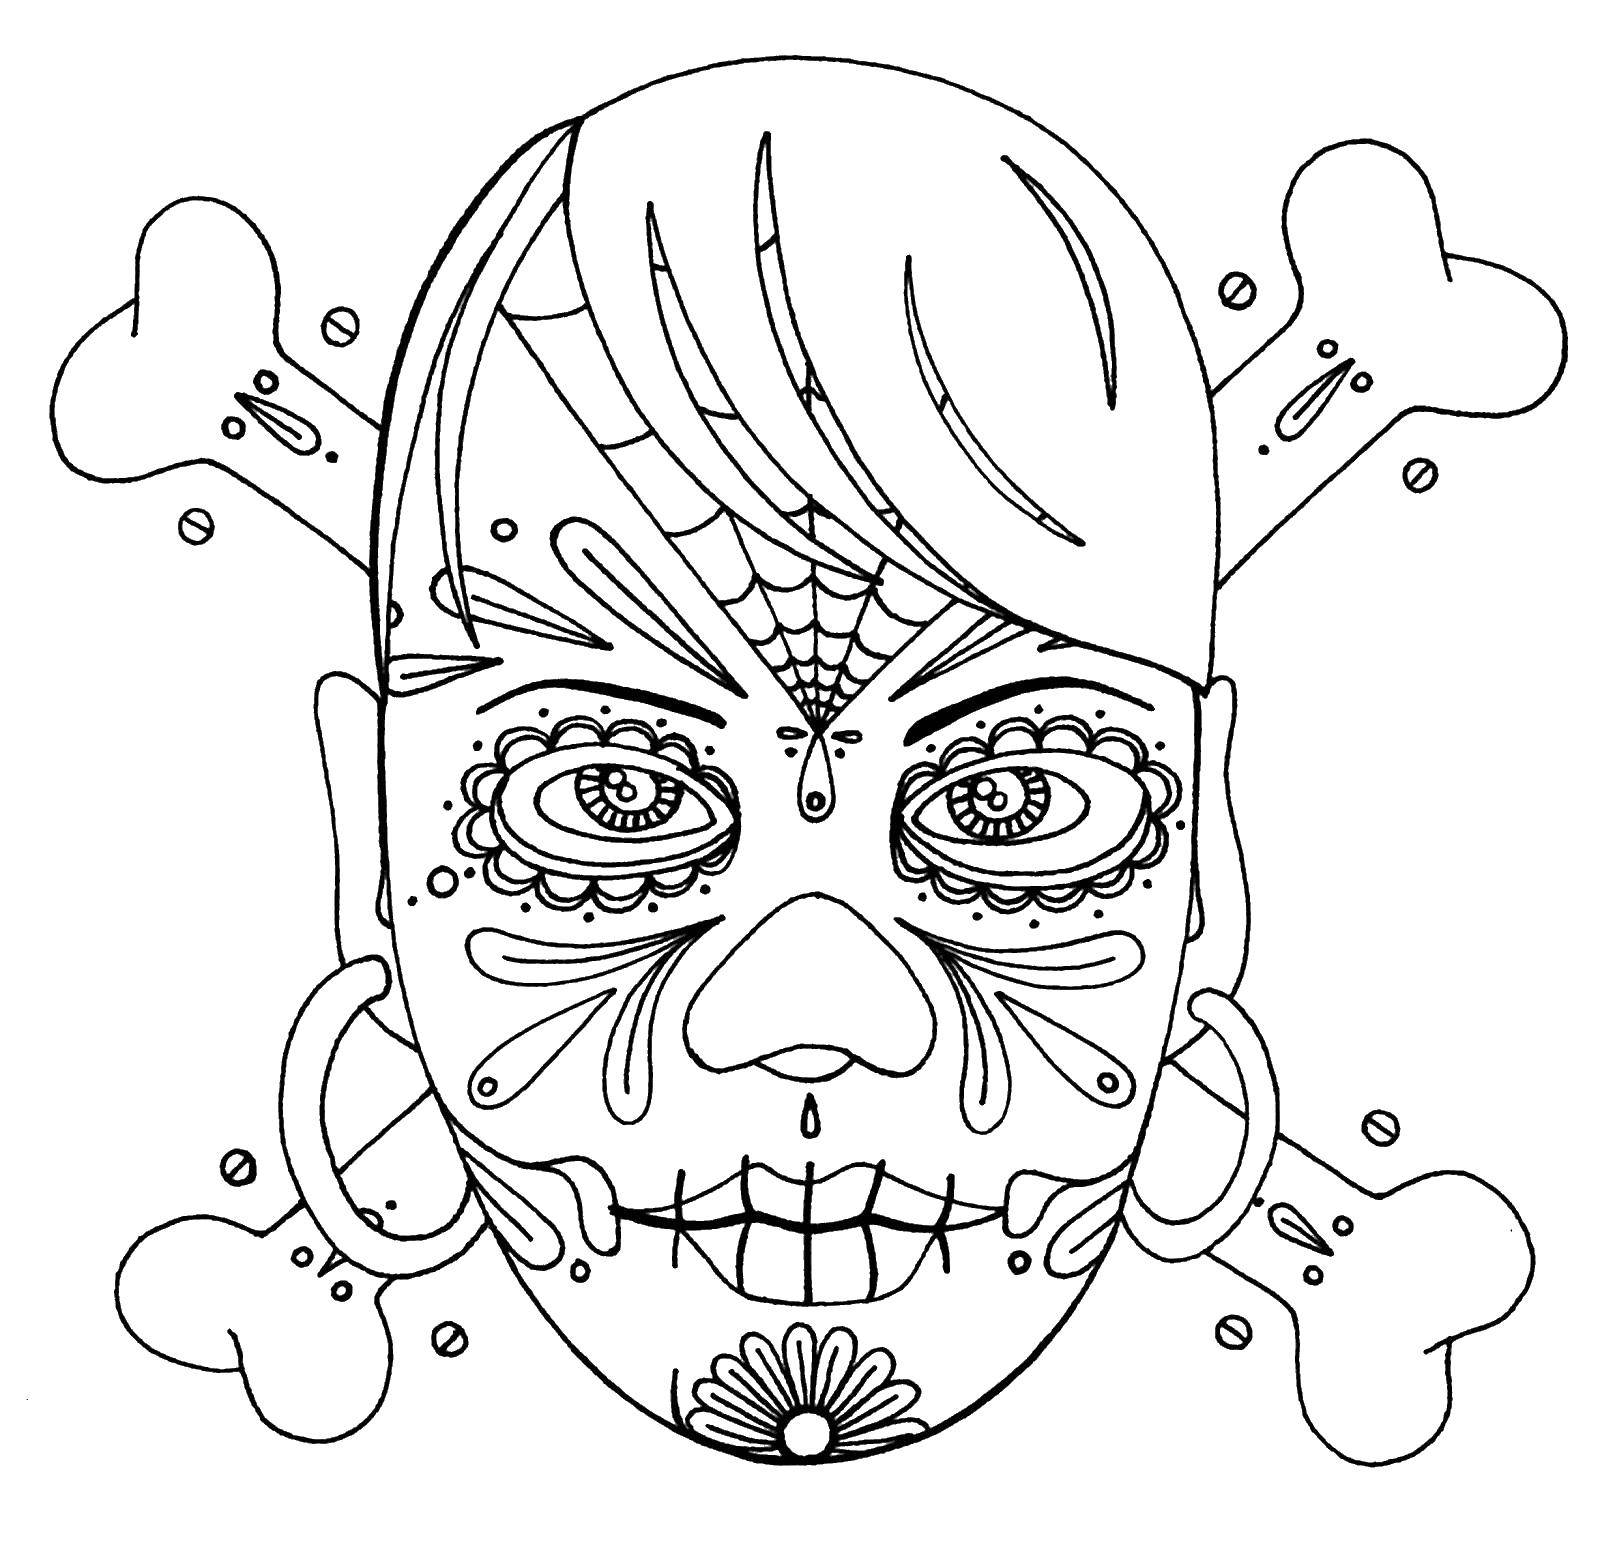 Название: Раскраска Голова девушки с костями. Категория: Череп. Теги: череп.